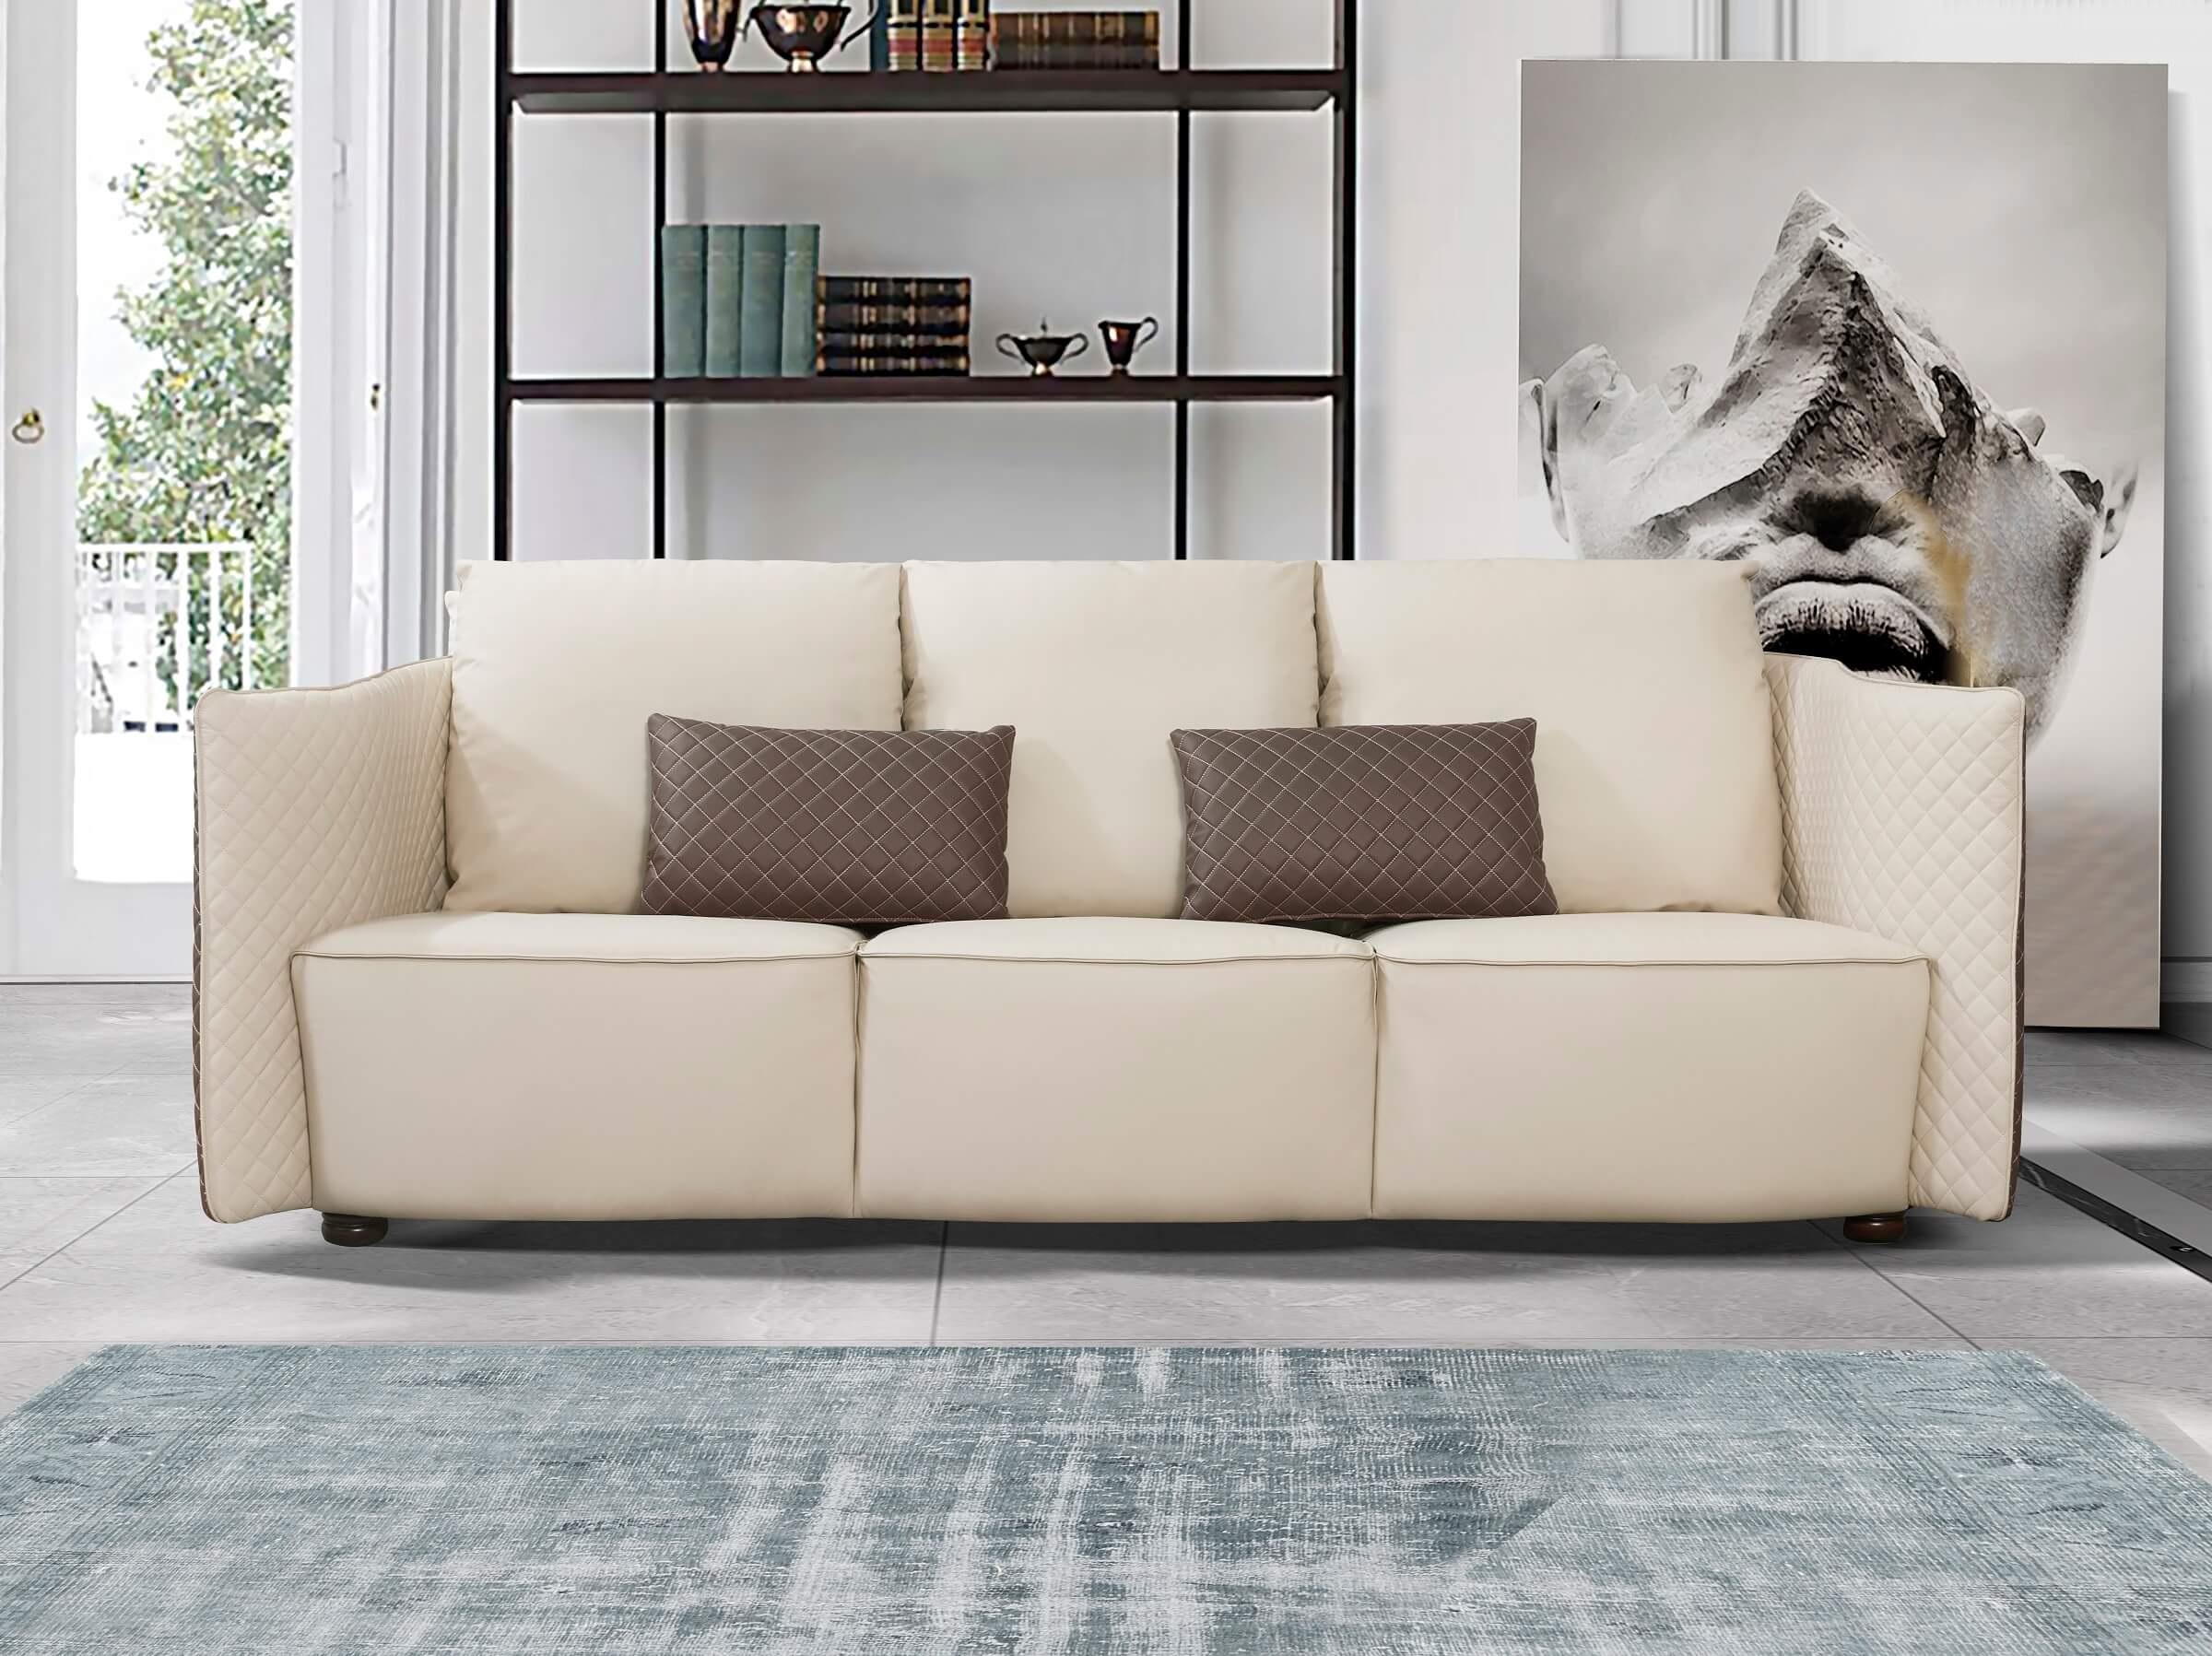 Contemporary, Modern Sofa MAKASSAR EF-52550-S in Light Grey, Taupe Italian Leather